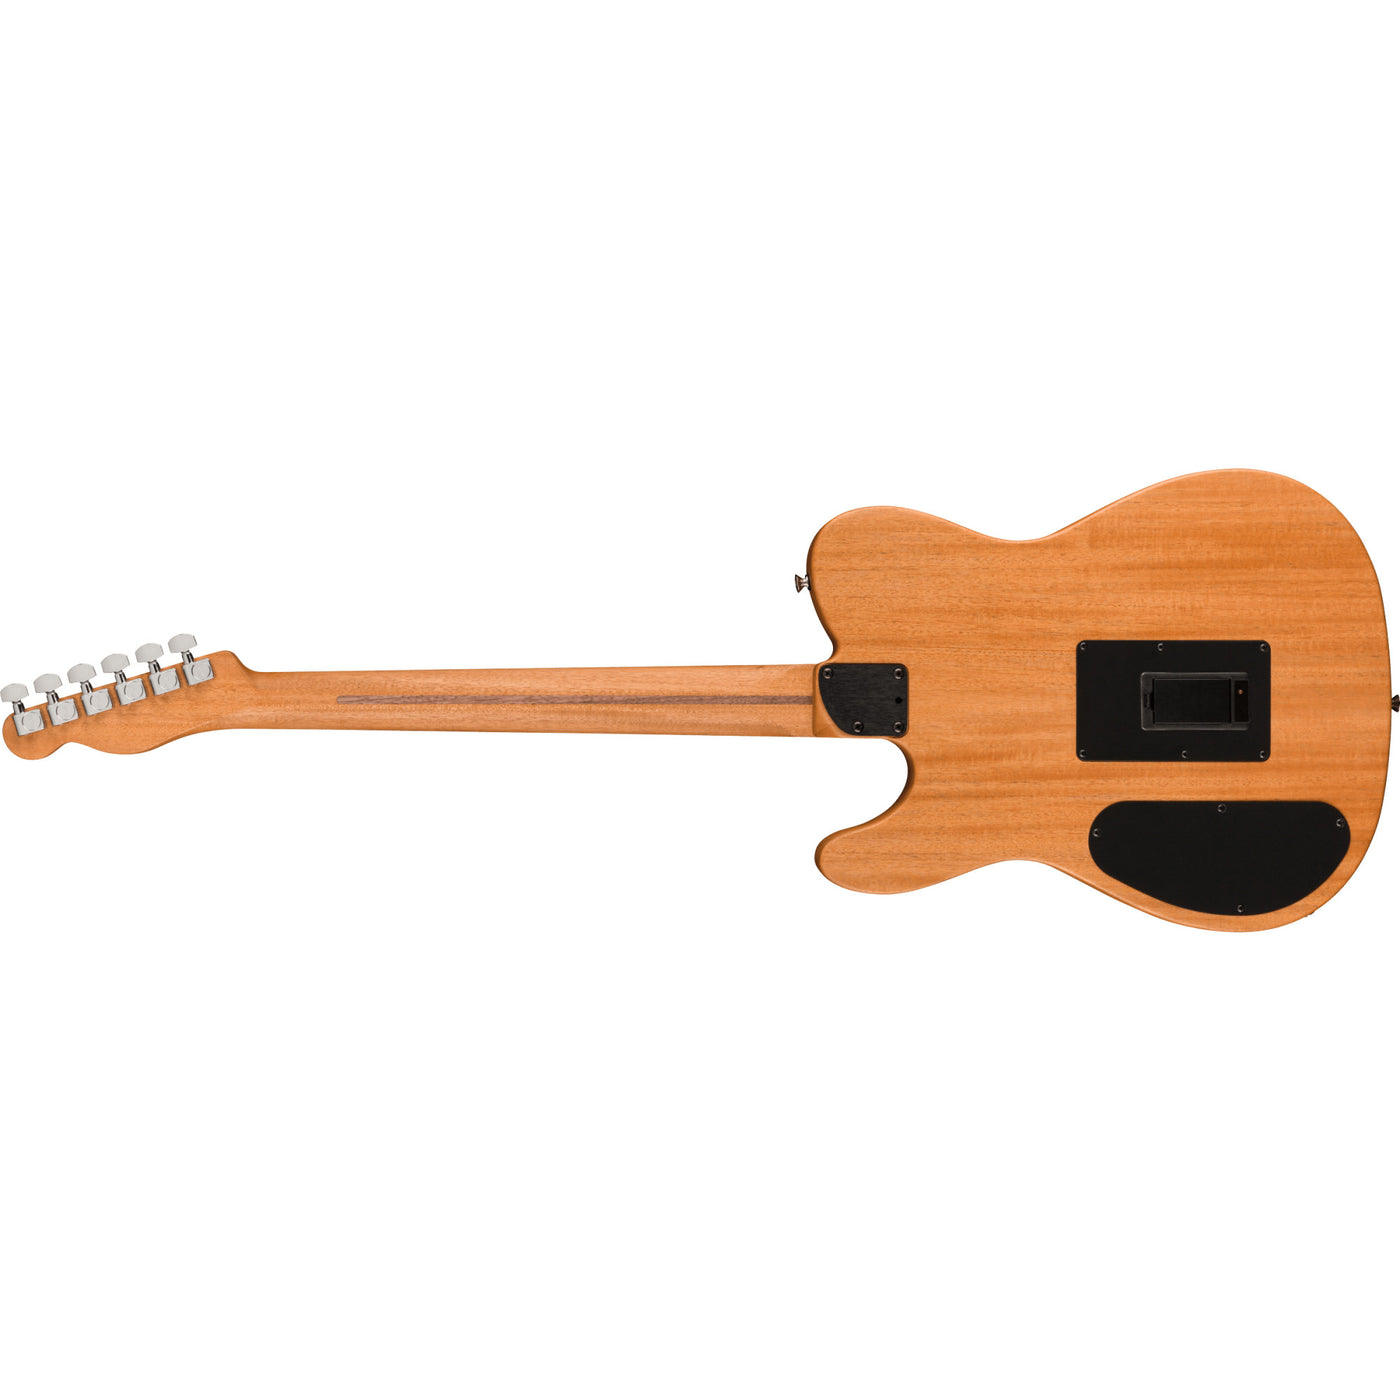 Fender Acoustasonic Player Telecaster Electric Guitar, Artic White (0972213280)